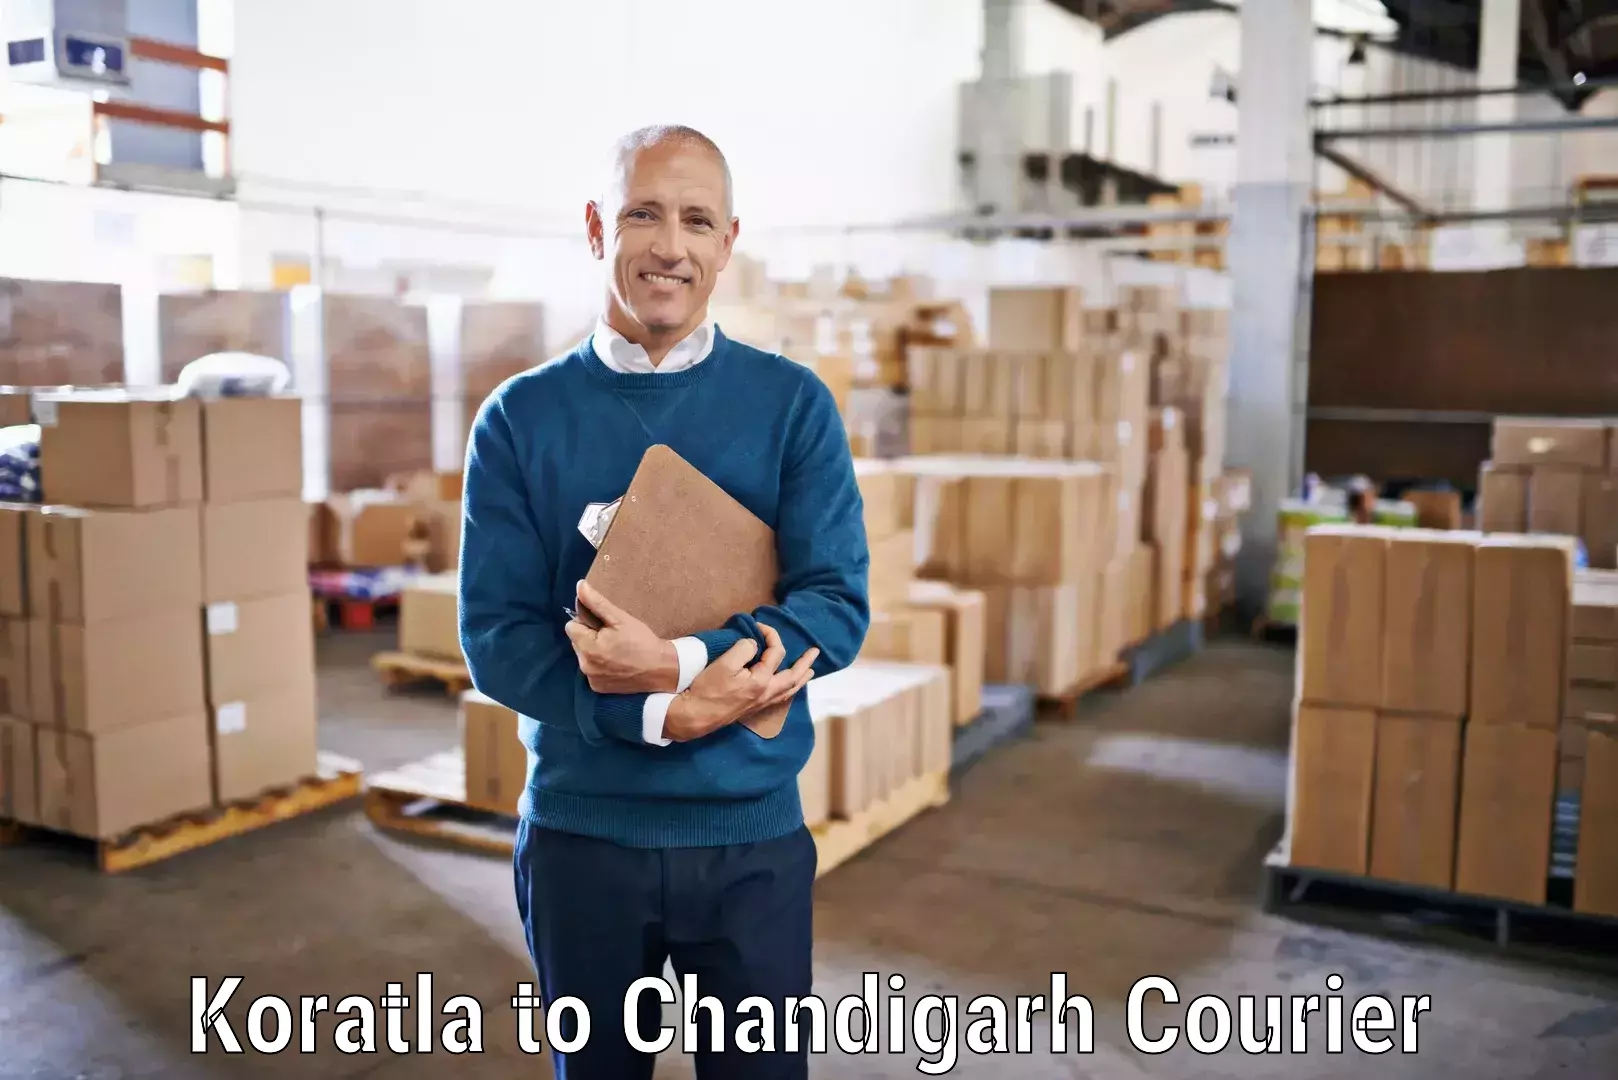 Global logistics network Koratla to Chandigarh